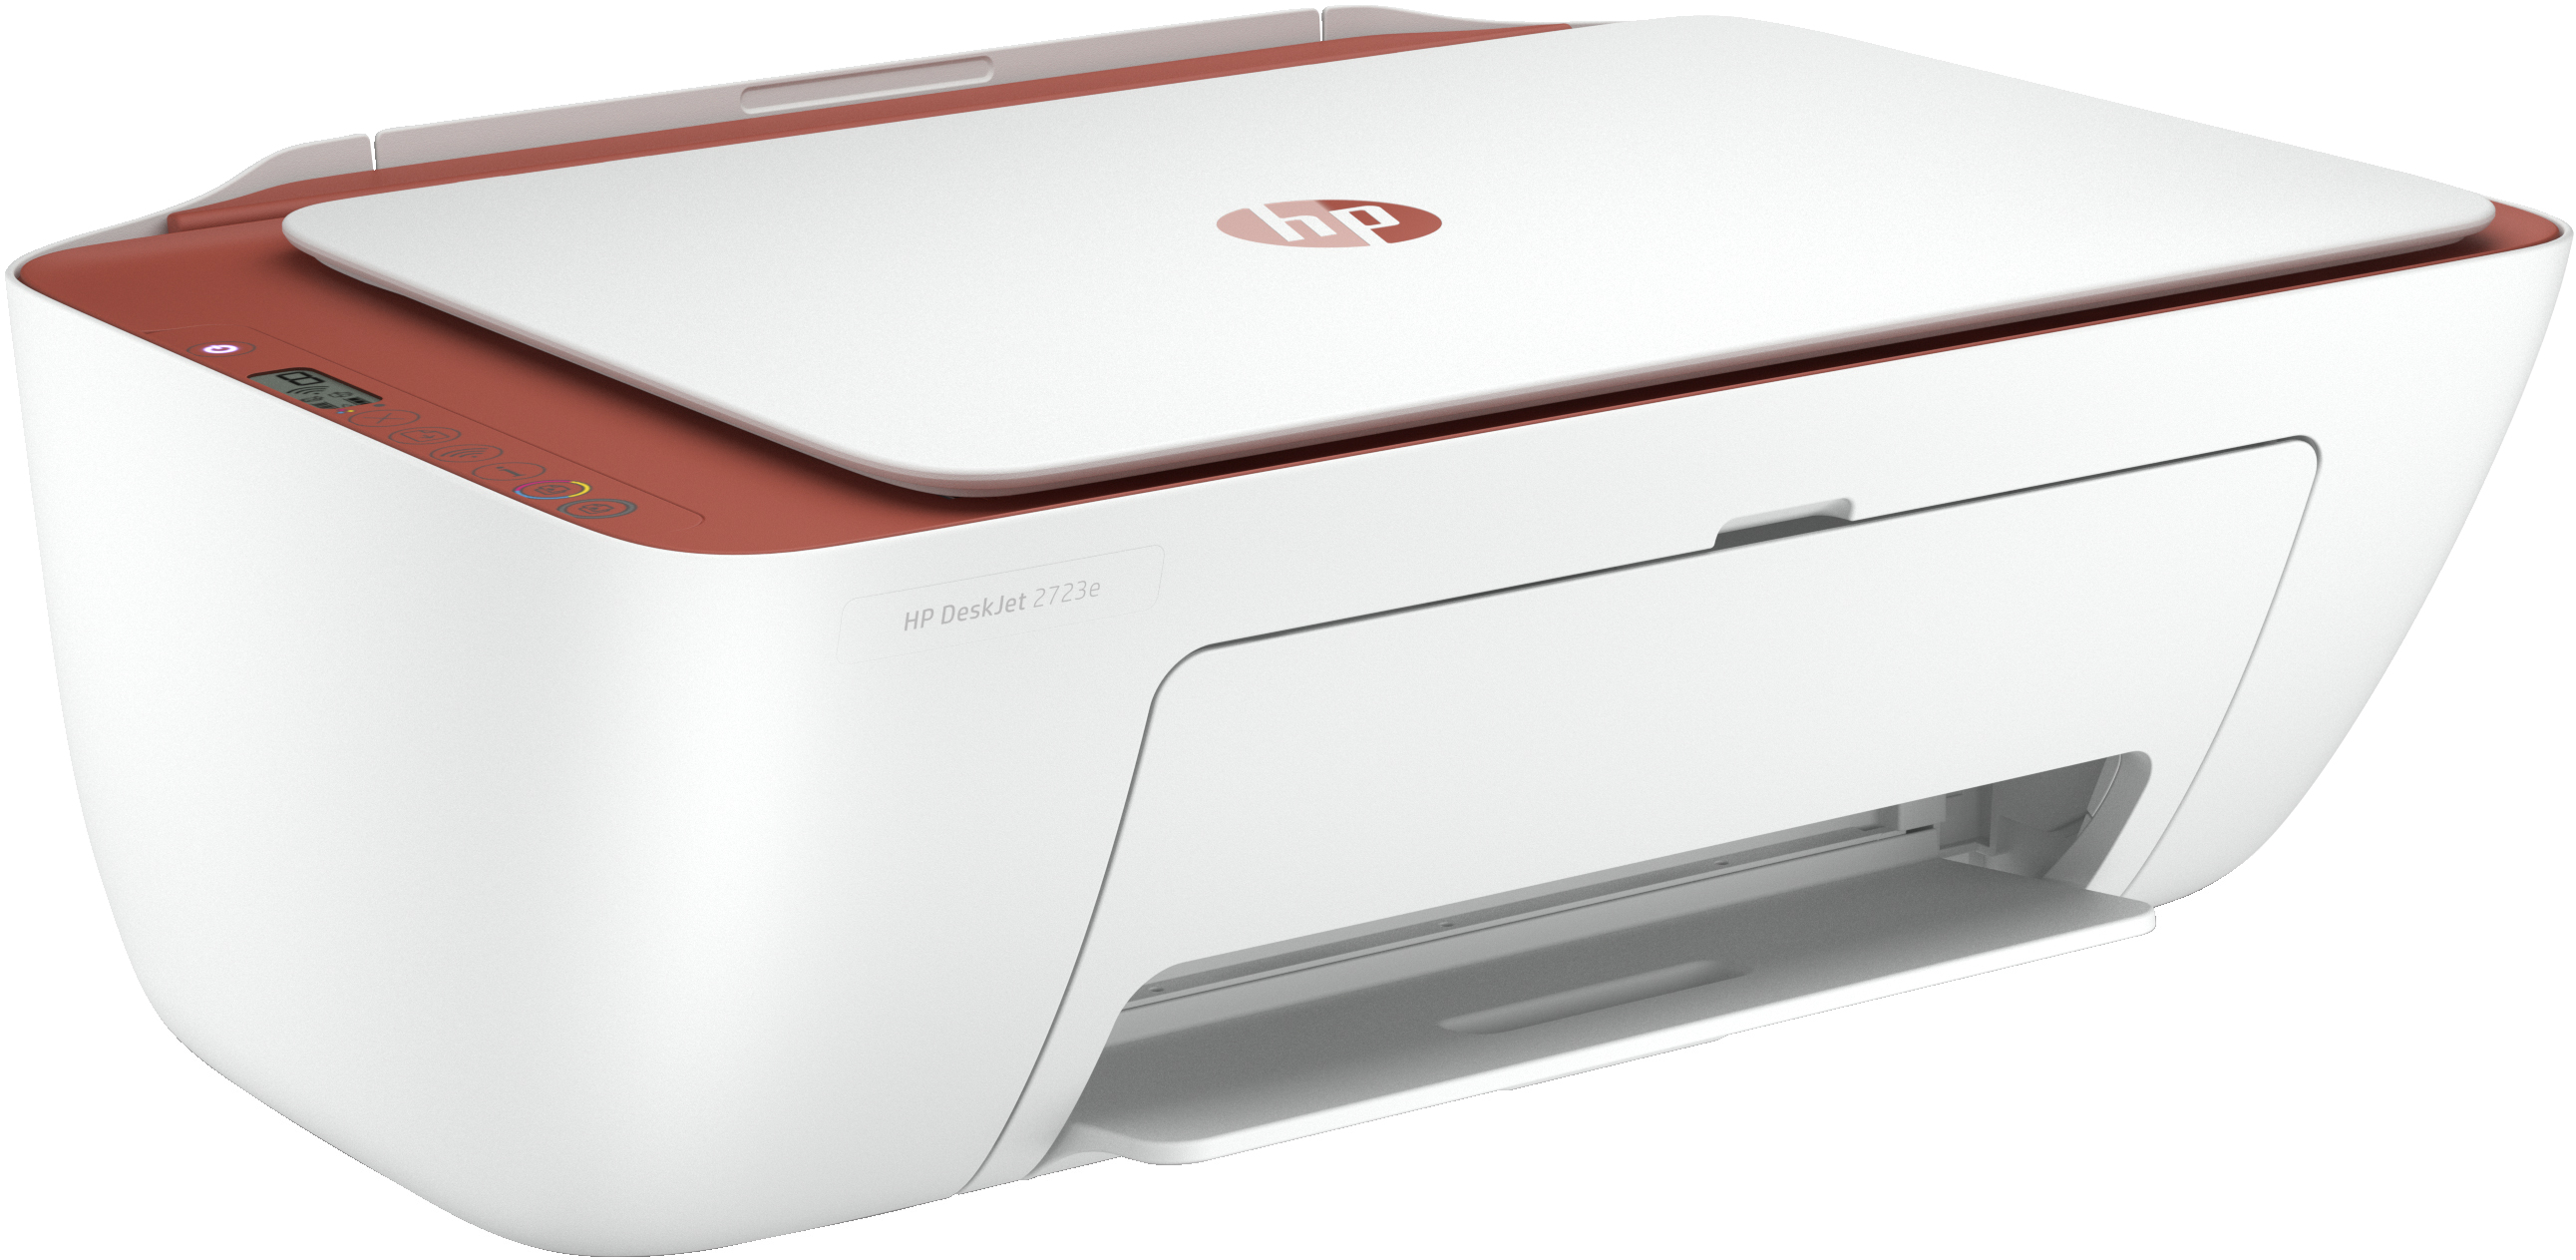 HP DeskJet Stampante multifunzione 2723e, Colore, per Casa, Stampa, copia, scansione, wireless; HP+; idonea a Instant Ink; stampa da smartphone o tablet [26K70B]